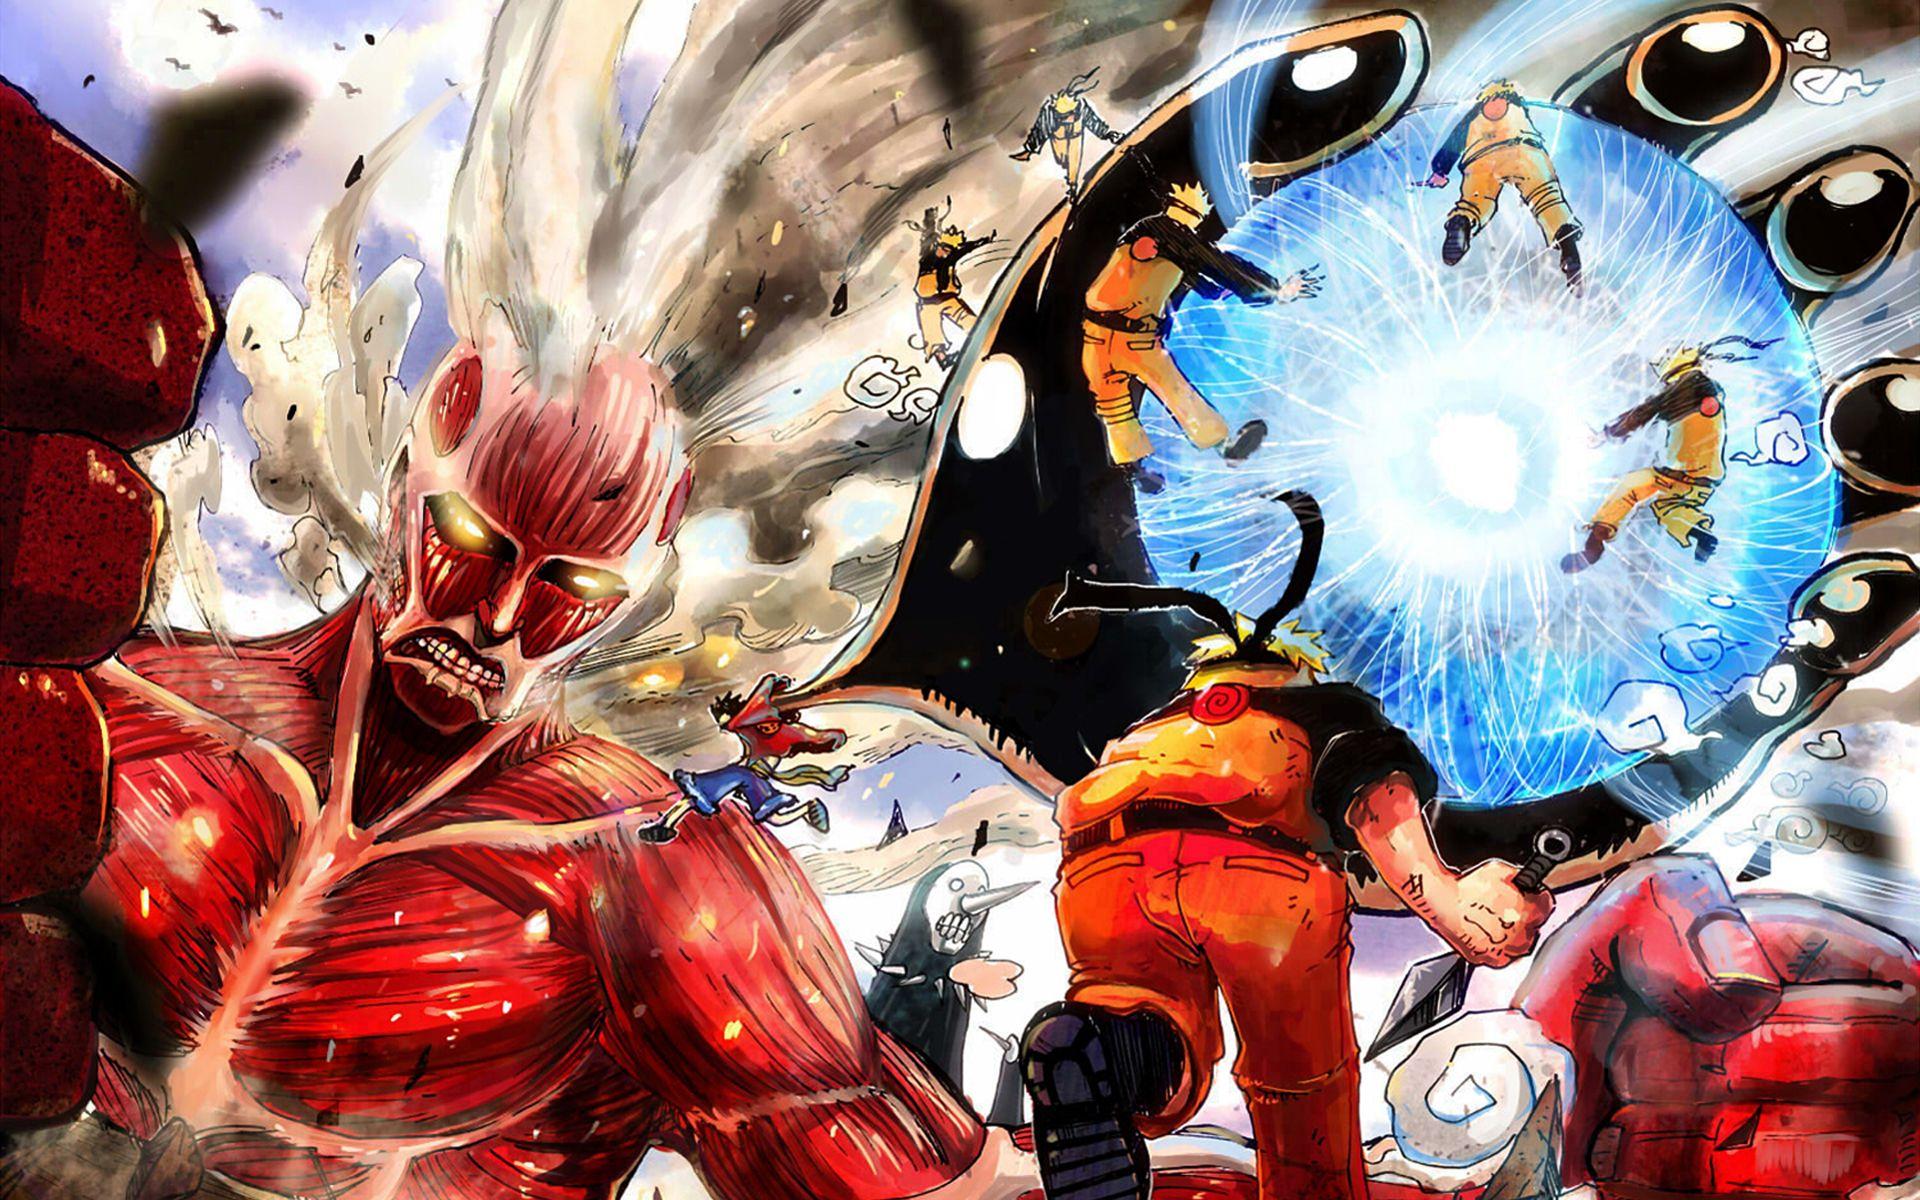 Awesome crossover art: One Piece + Naruto + Shingeki no Kyojin. ONE